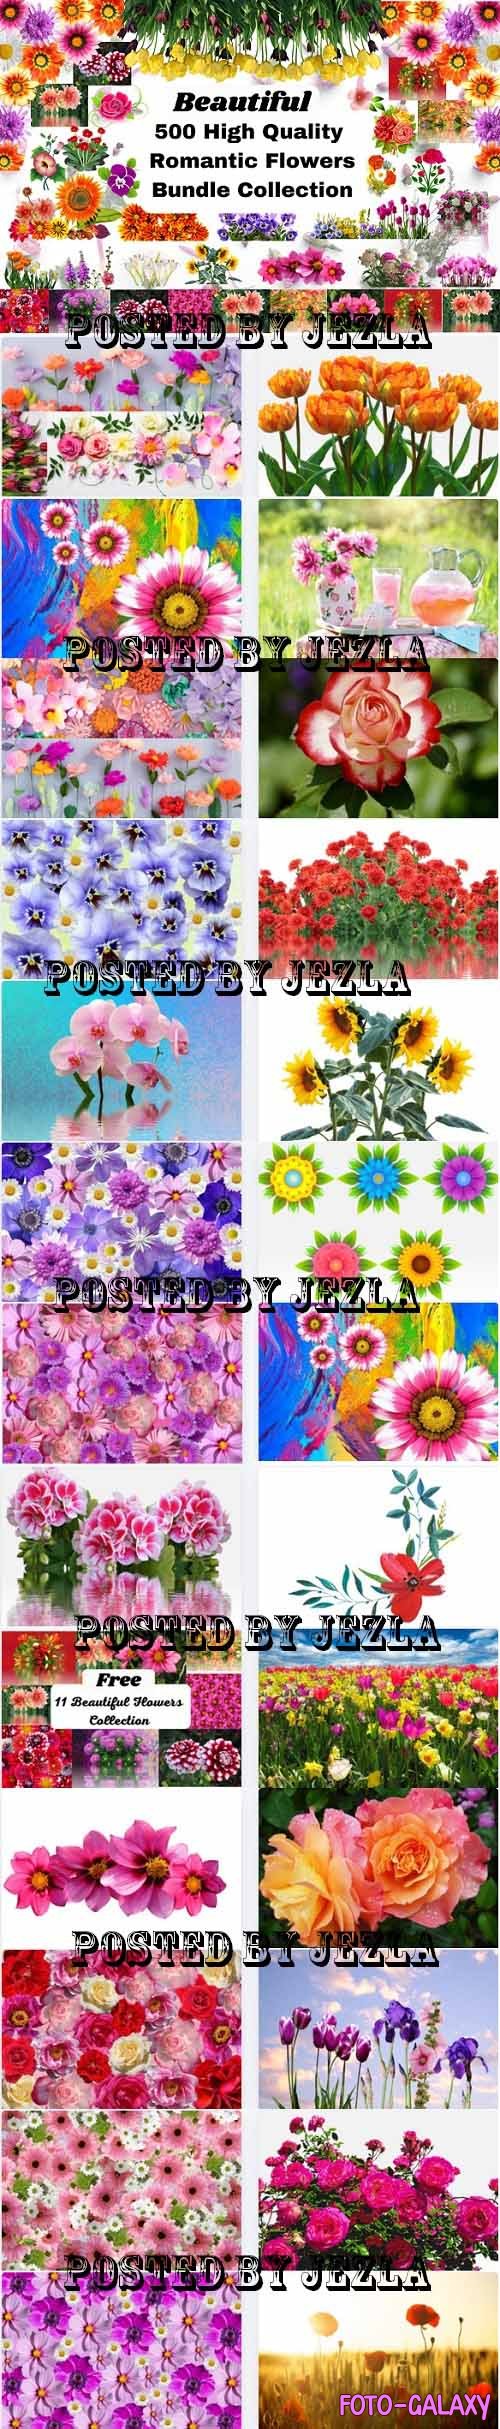 Romantic Flowers Bundle - 25 Premium Graphics